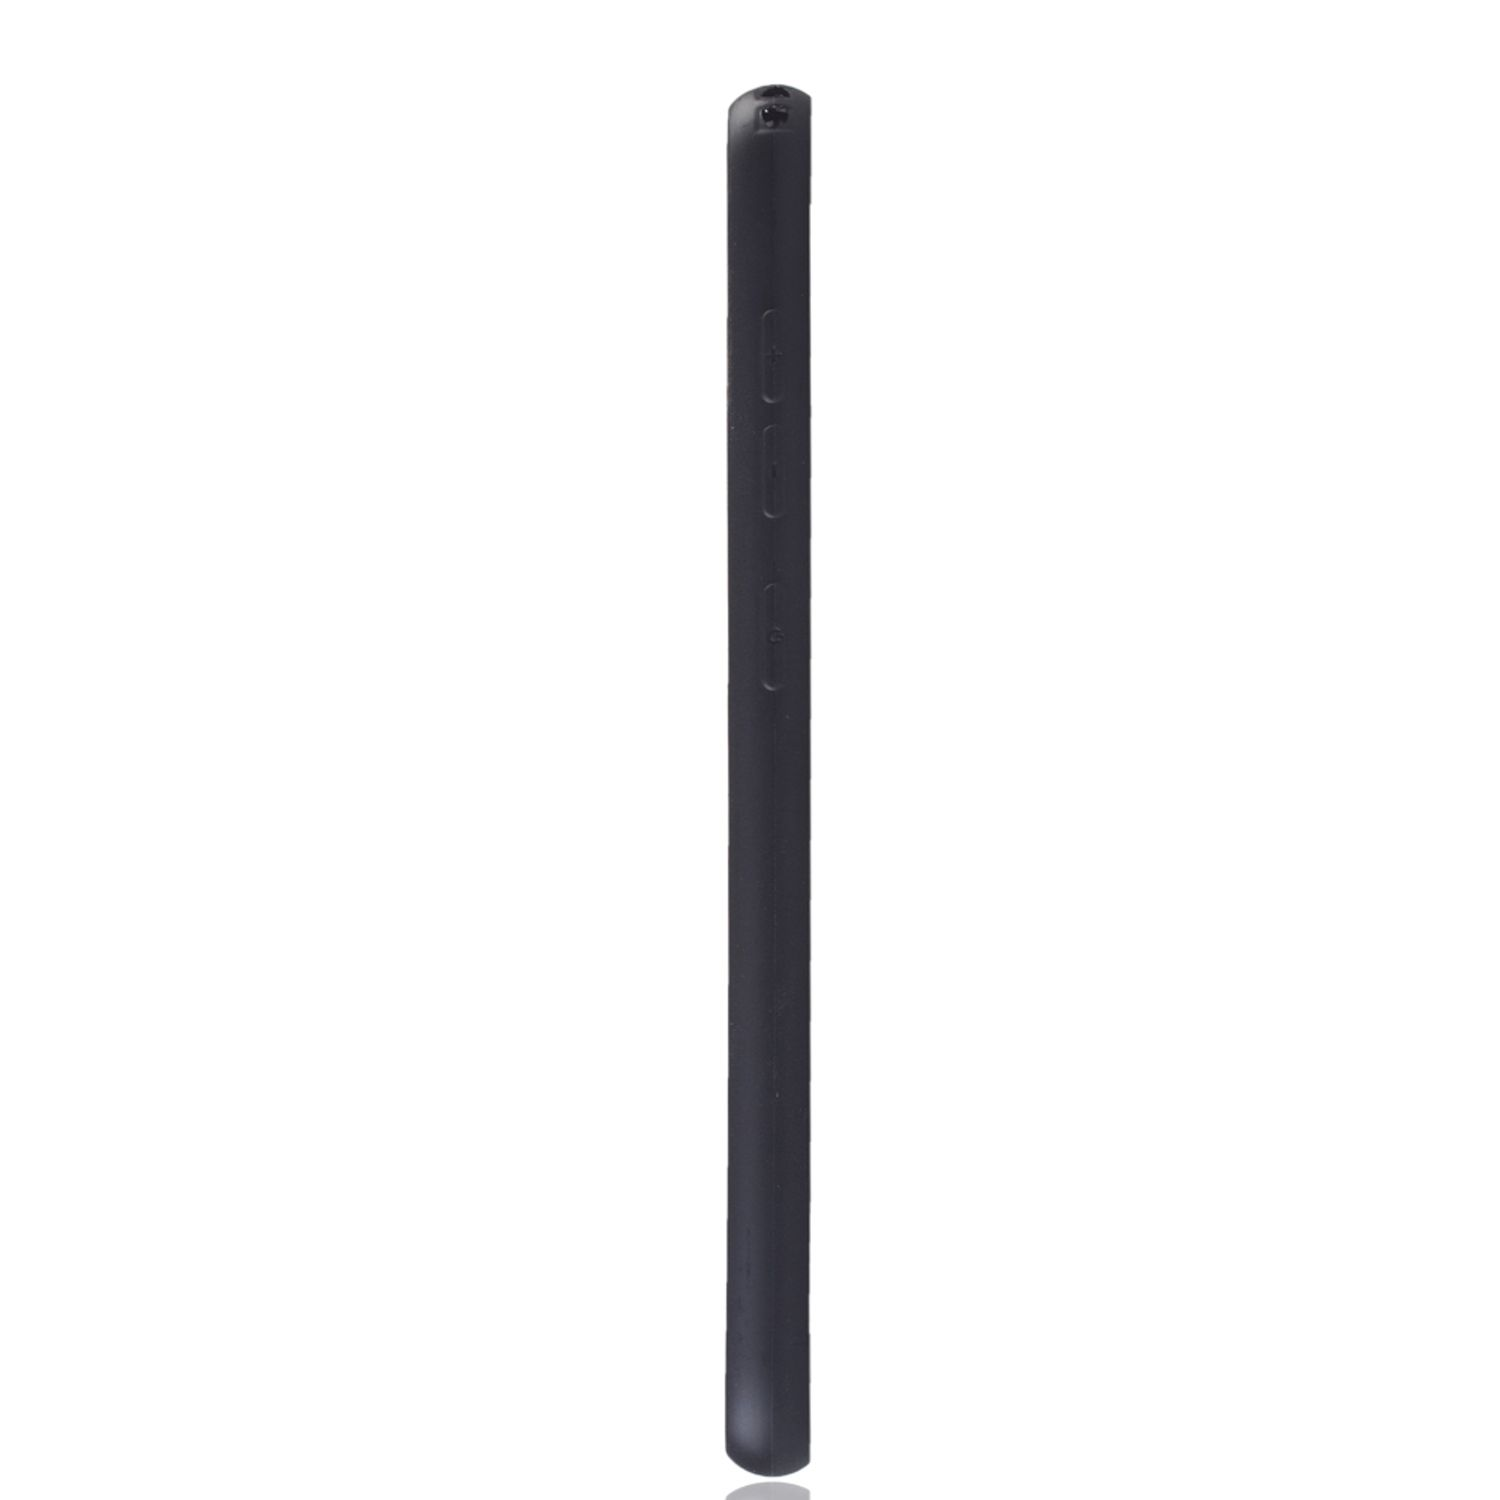 Samsung, Schwarz KÖNIG DESIGN Galaxy S8, Schutzhülle, Backcover,